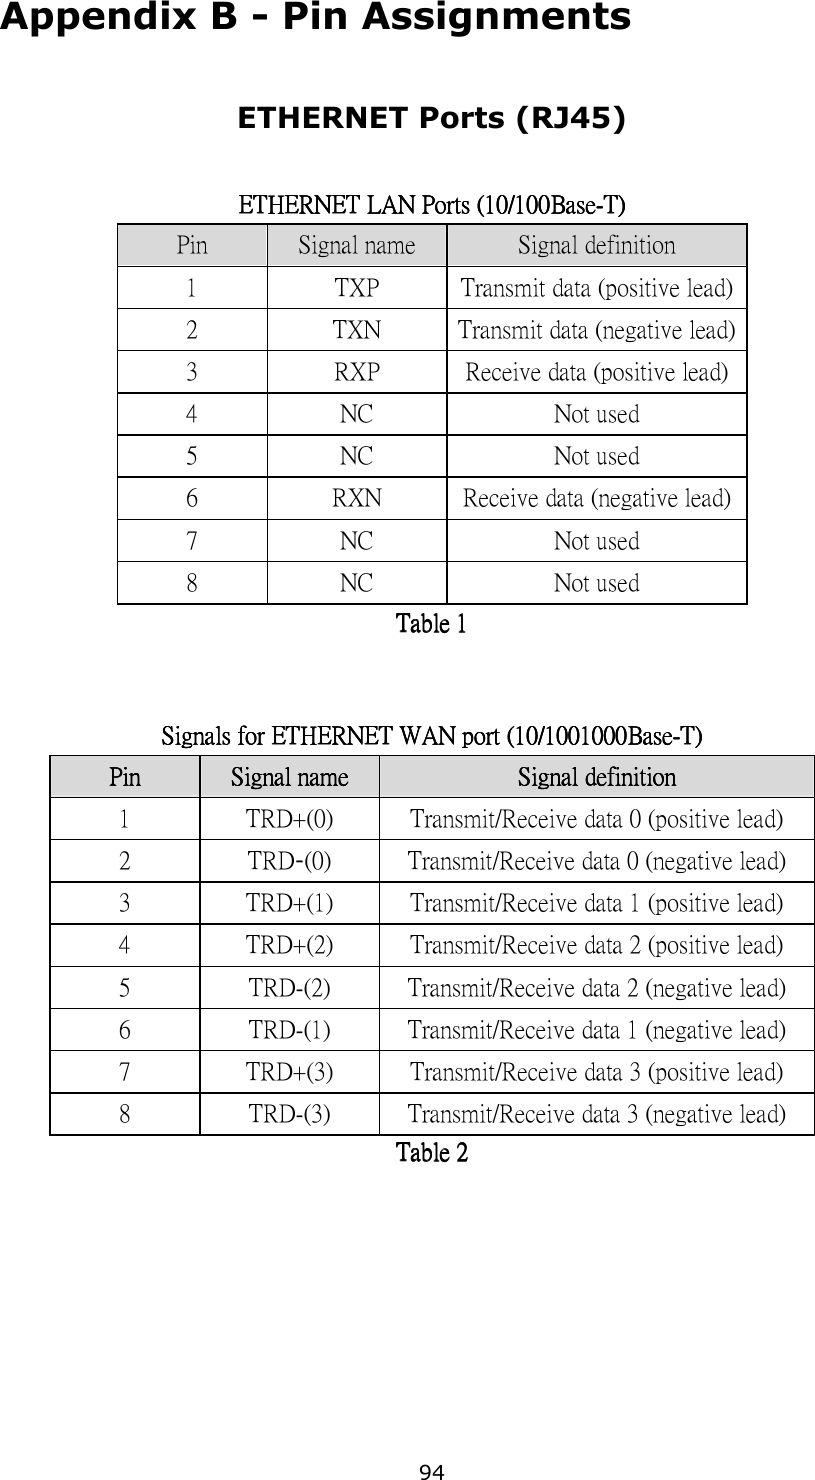   94 Appendix B - Pin Assignments  ETHERNET Ports (RJ45)   ETHERNET LAN ETHERNET LAN ETHERNET LAN ETHERNET LAN PortsPortsPortsPorts    (10(10(10(10/1/1/1/100Base00Base00Base00Base----TTTT))))    Pin  Signal name  Signal definition 1  TXP  Transmit data (positive lead) 2  TXN  Transmit data (negative lead) 3  RXP  Receive data (positive lead) 4  NC  Not used 5  NC  Not used 6  RXN  Receive data (negative lead) 7  NC  Not used 8  NC  Not used Table 1 Table 1 Table 1 Table 1         Signals for Signals for Signals for Signals for ETHERNET WAN port (10/100ETHERNET WAN port (10/100ETHERNET WAN port (10/100ETHERNET WAN port (10/1001000Base1000Base1000Base1000Base----TTTT)))) PinPinPinPin  Signal nameSignal nameSignal nameSignal name  Signal definitionSignal definitionSignal definitionSignal definition 1  TRD+(0)  Transmit/Receive data 0 (positive lead) 2  TRD-(0)  Transmit/Receive data 0 (negative lead) 3  TRD+(1)  Transmit/Receive data 1 (positive lead) 4  TRD+(2)  Transmit/Receive data 2 (positive lead) 5  TRD-(2)  Transmit/Receive data 2 (negative lead) 6  TRD-(1)  Transmit/Receive data 1 (negative lead) 7  TRD+(3)  Transmit/Receive data 3 (positive lead) 8  TRD-(3)  Transmit/Receive data 3 (negative lead) Table 2 Table 2 Table 2 Table 2           